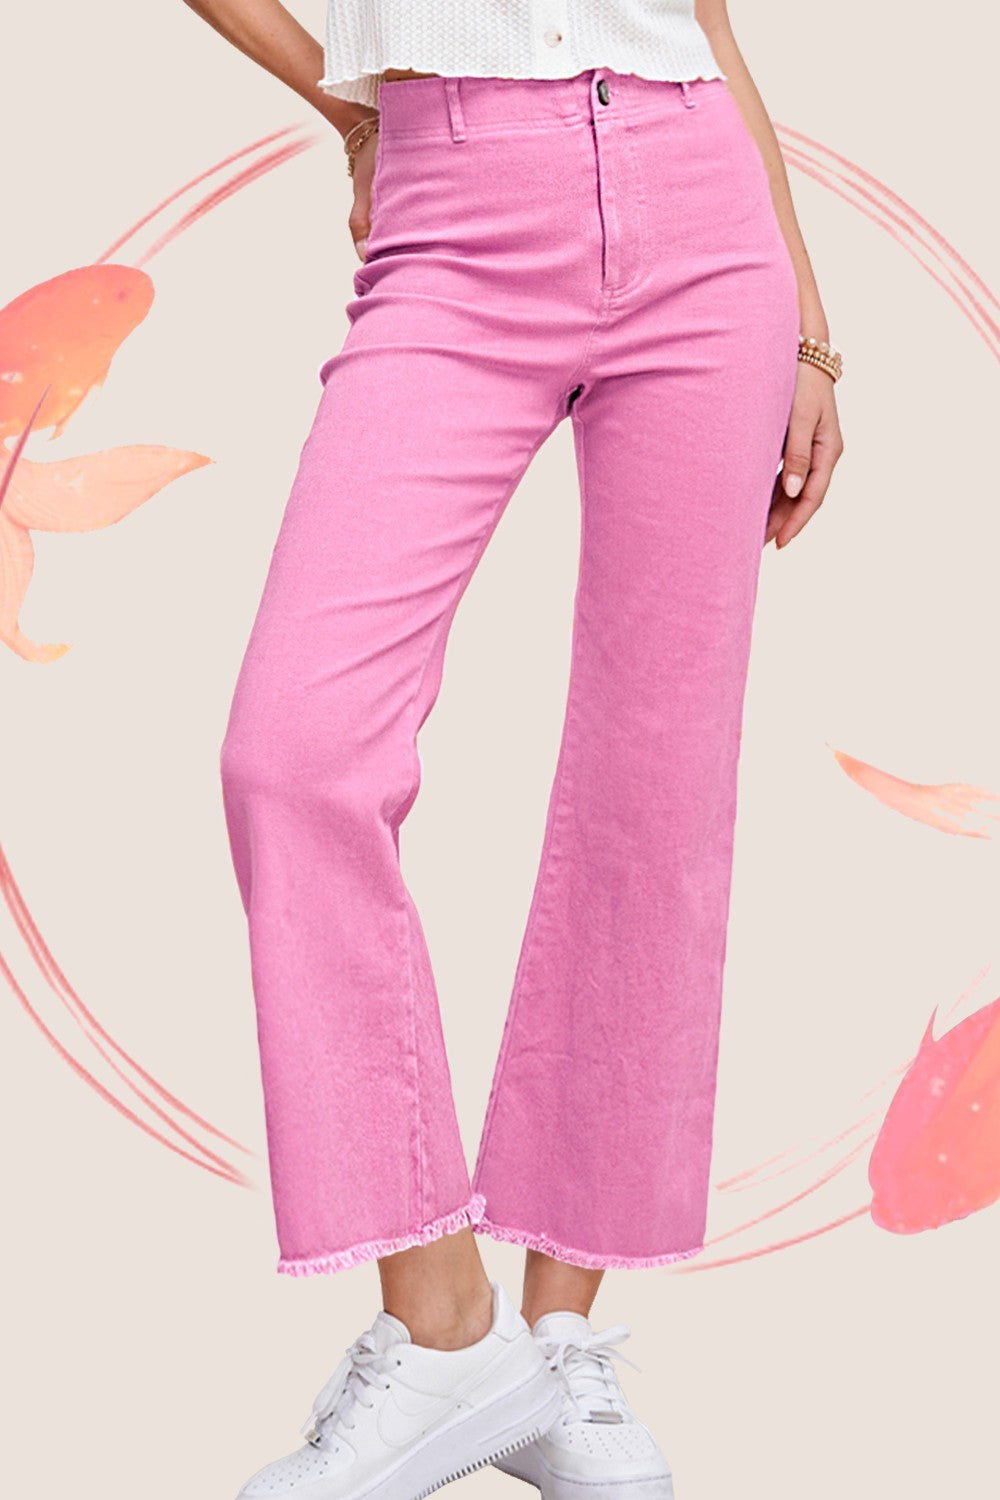 Candy Pink Denim Jeans